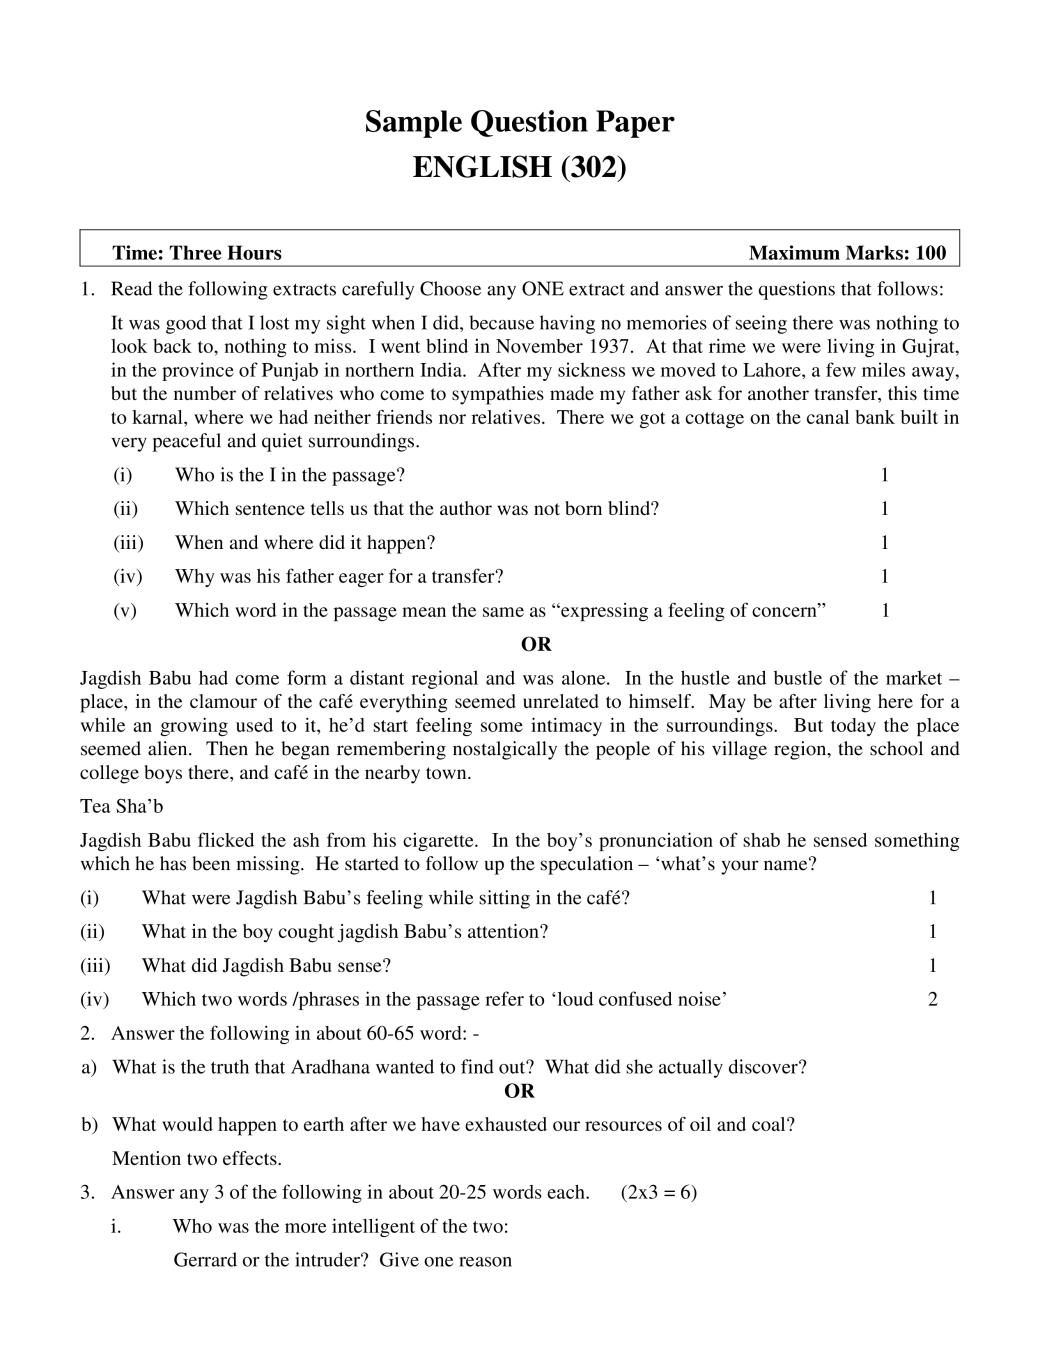 NIOS Class 12 Sample Paper 2020 - English - Page 1